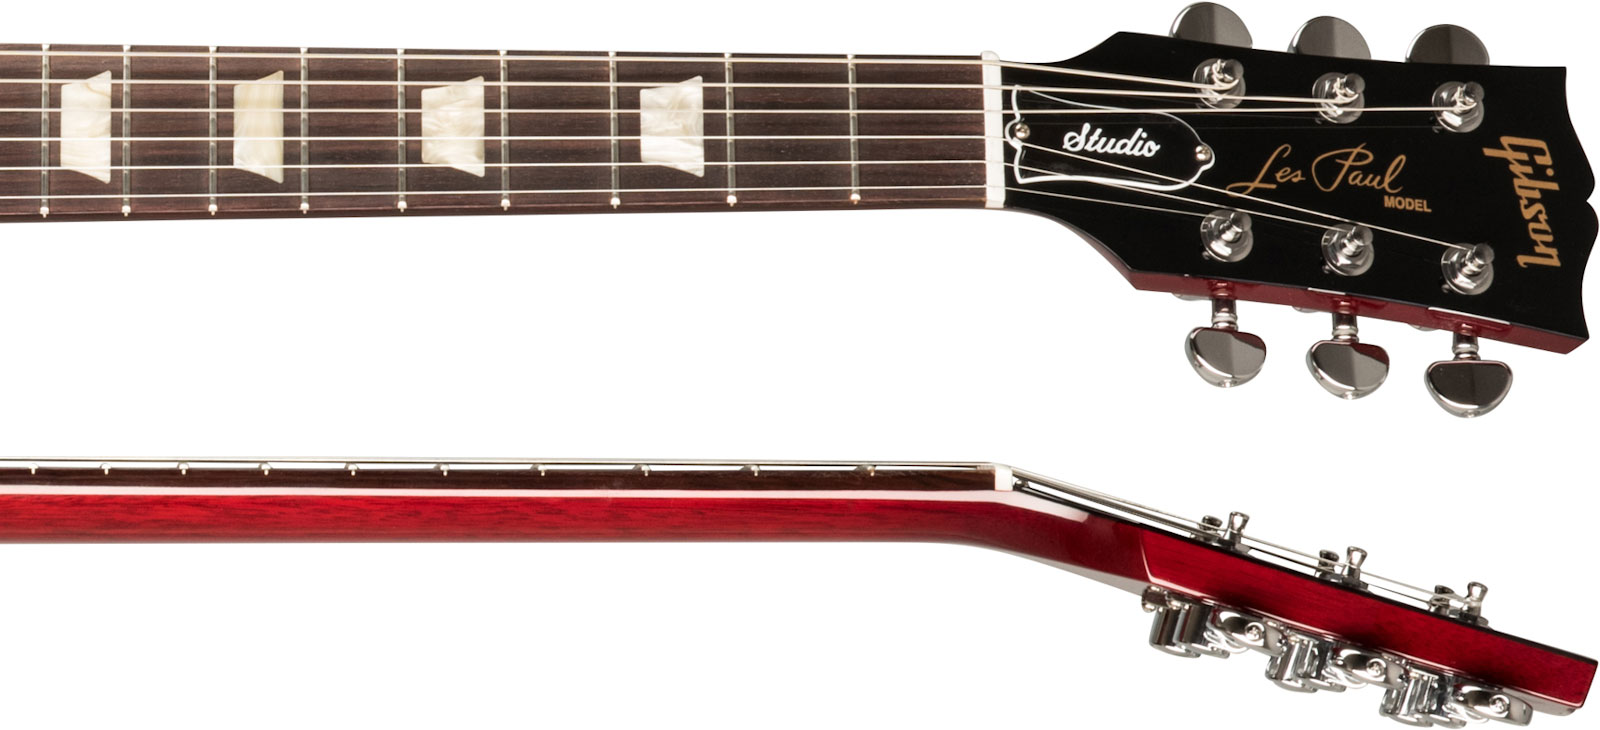 Gibson Les Paul Studio Modern 2019 2h Ht Rw - Wine Red - Enkel gesneden elektrische gitaar - Variation 3